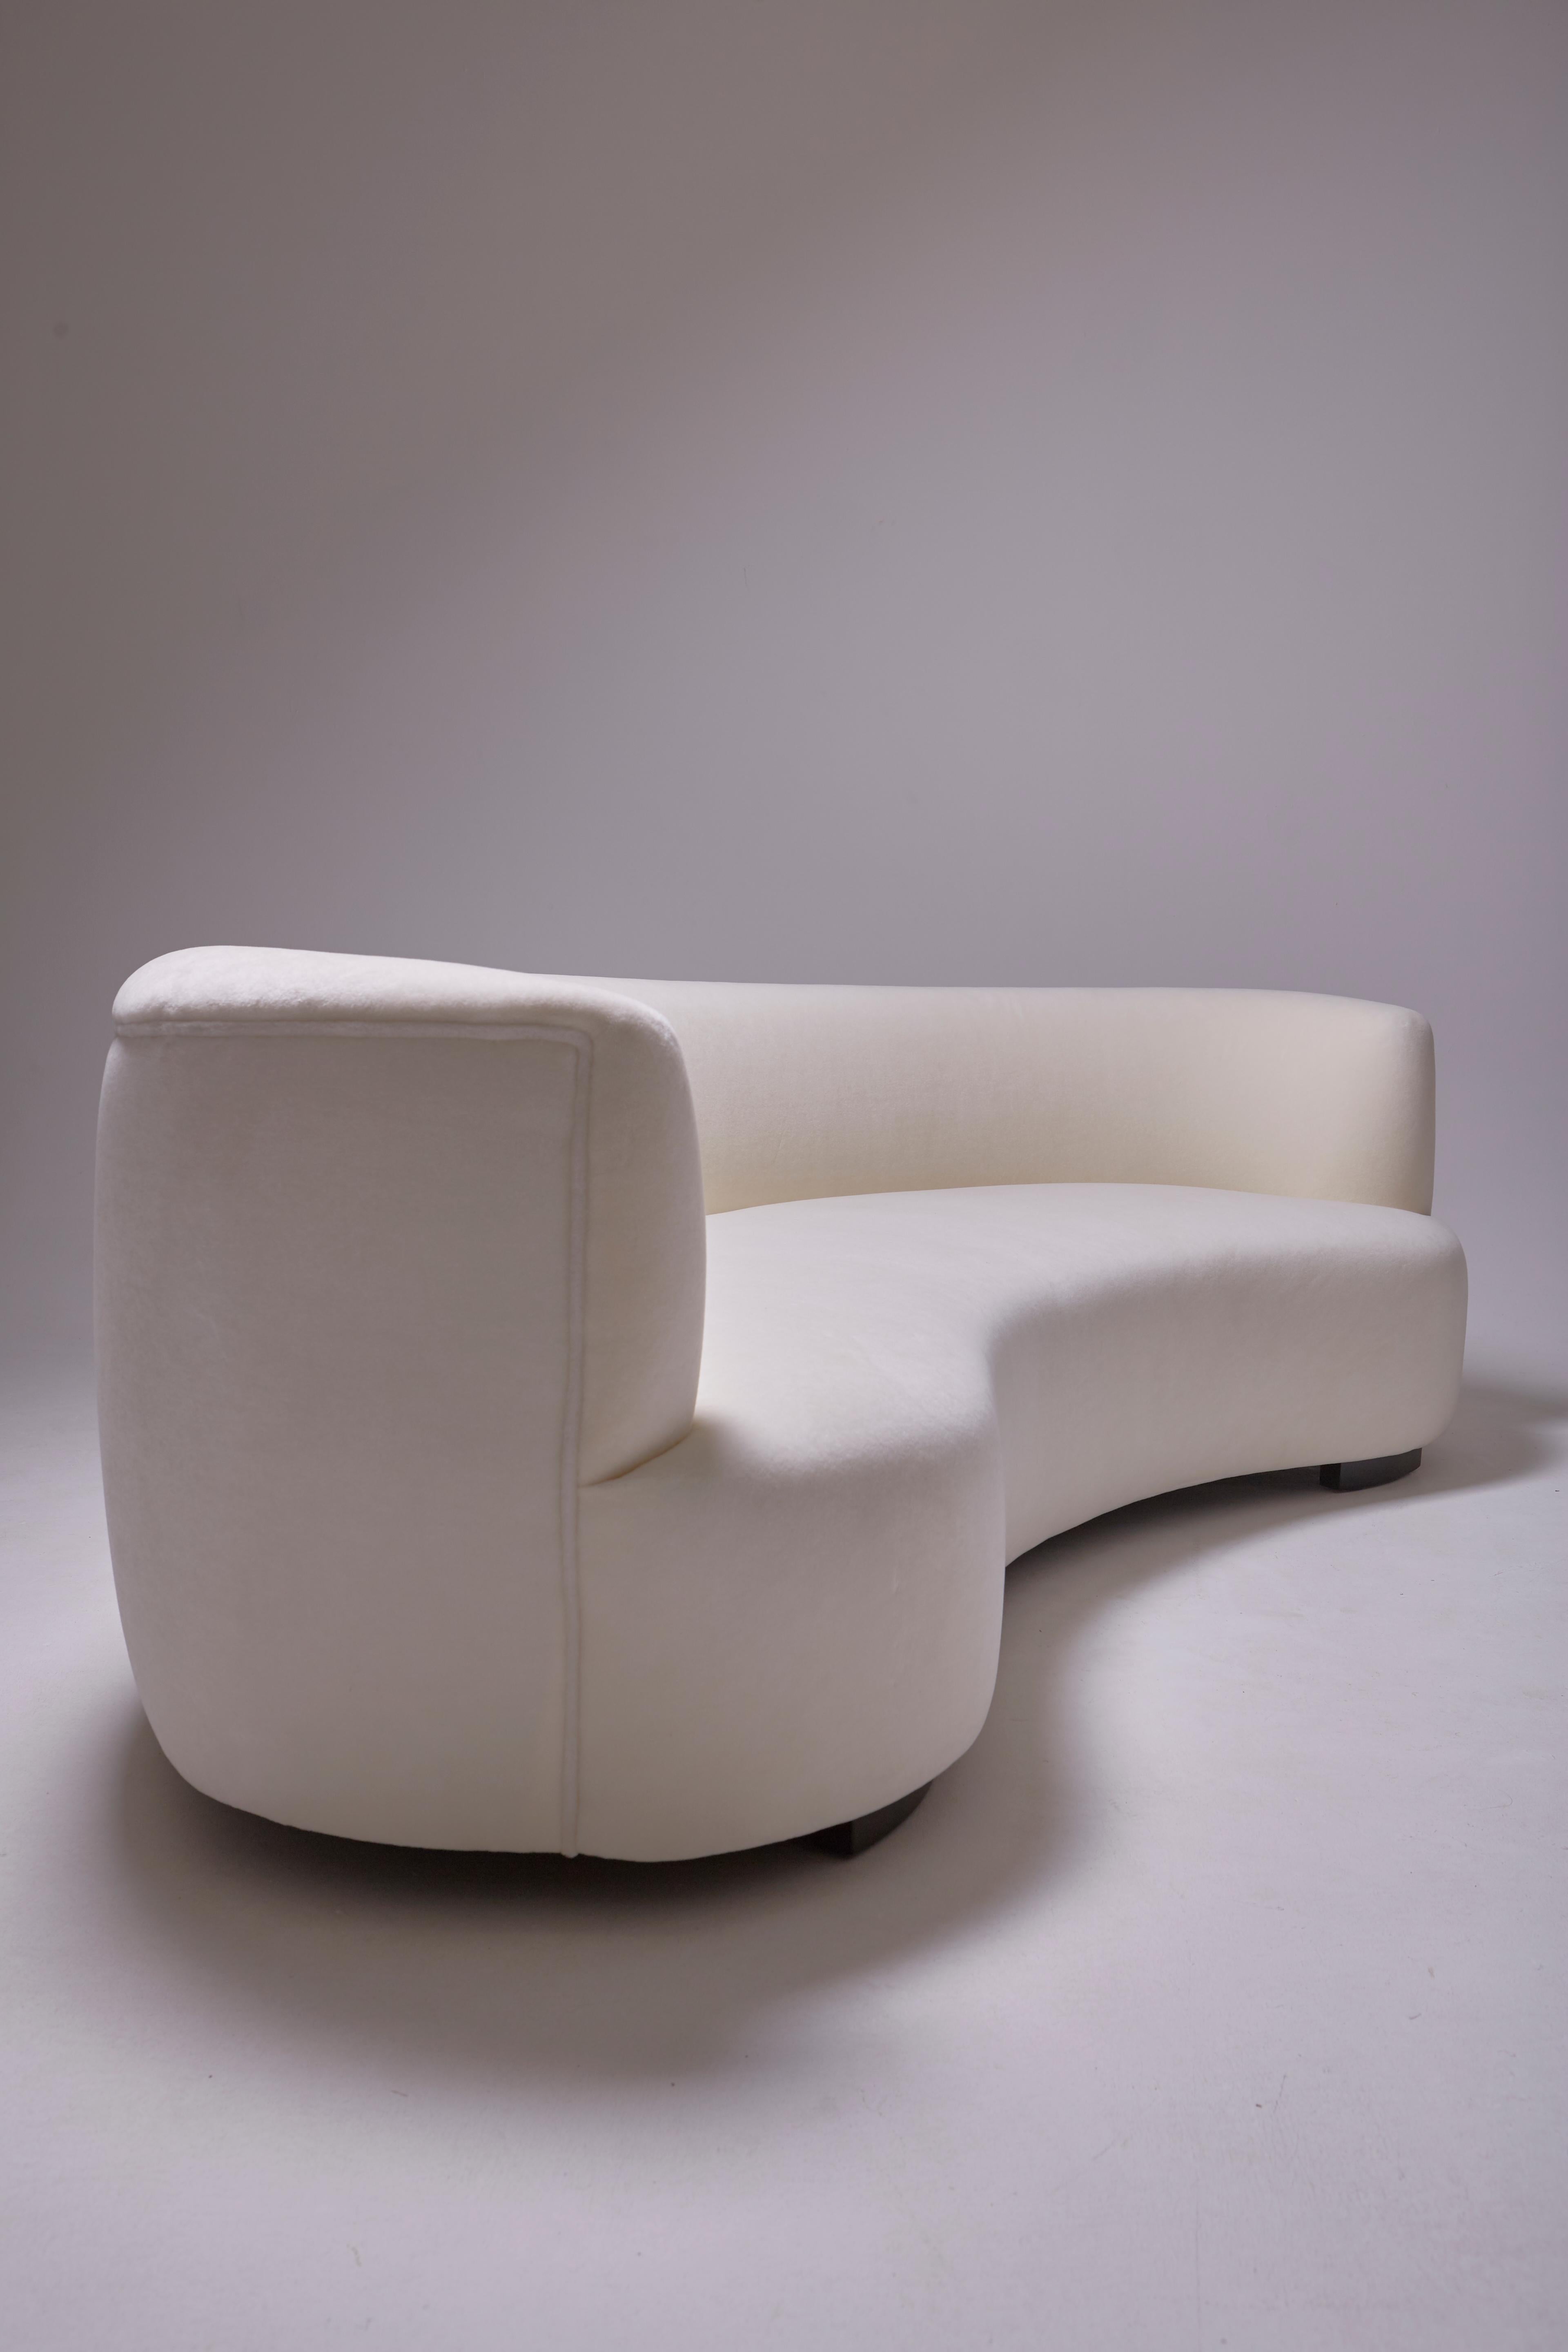 Curved sofa design 1950s 1